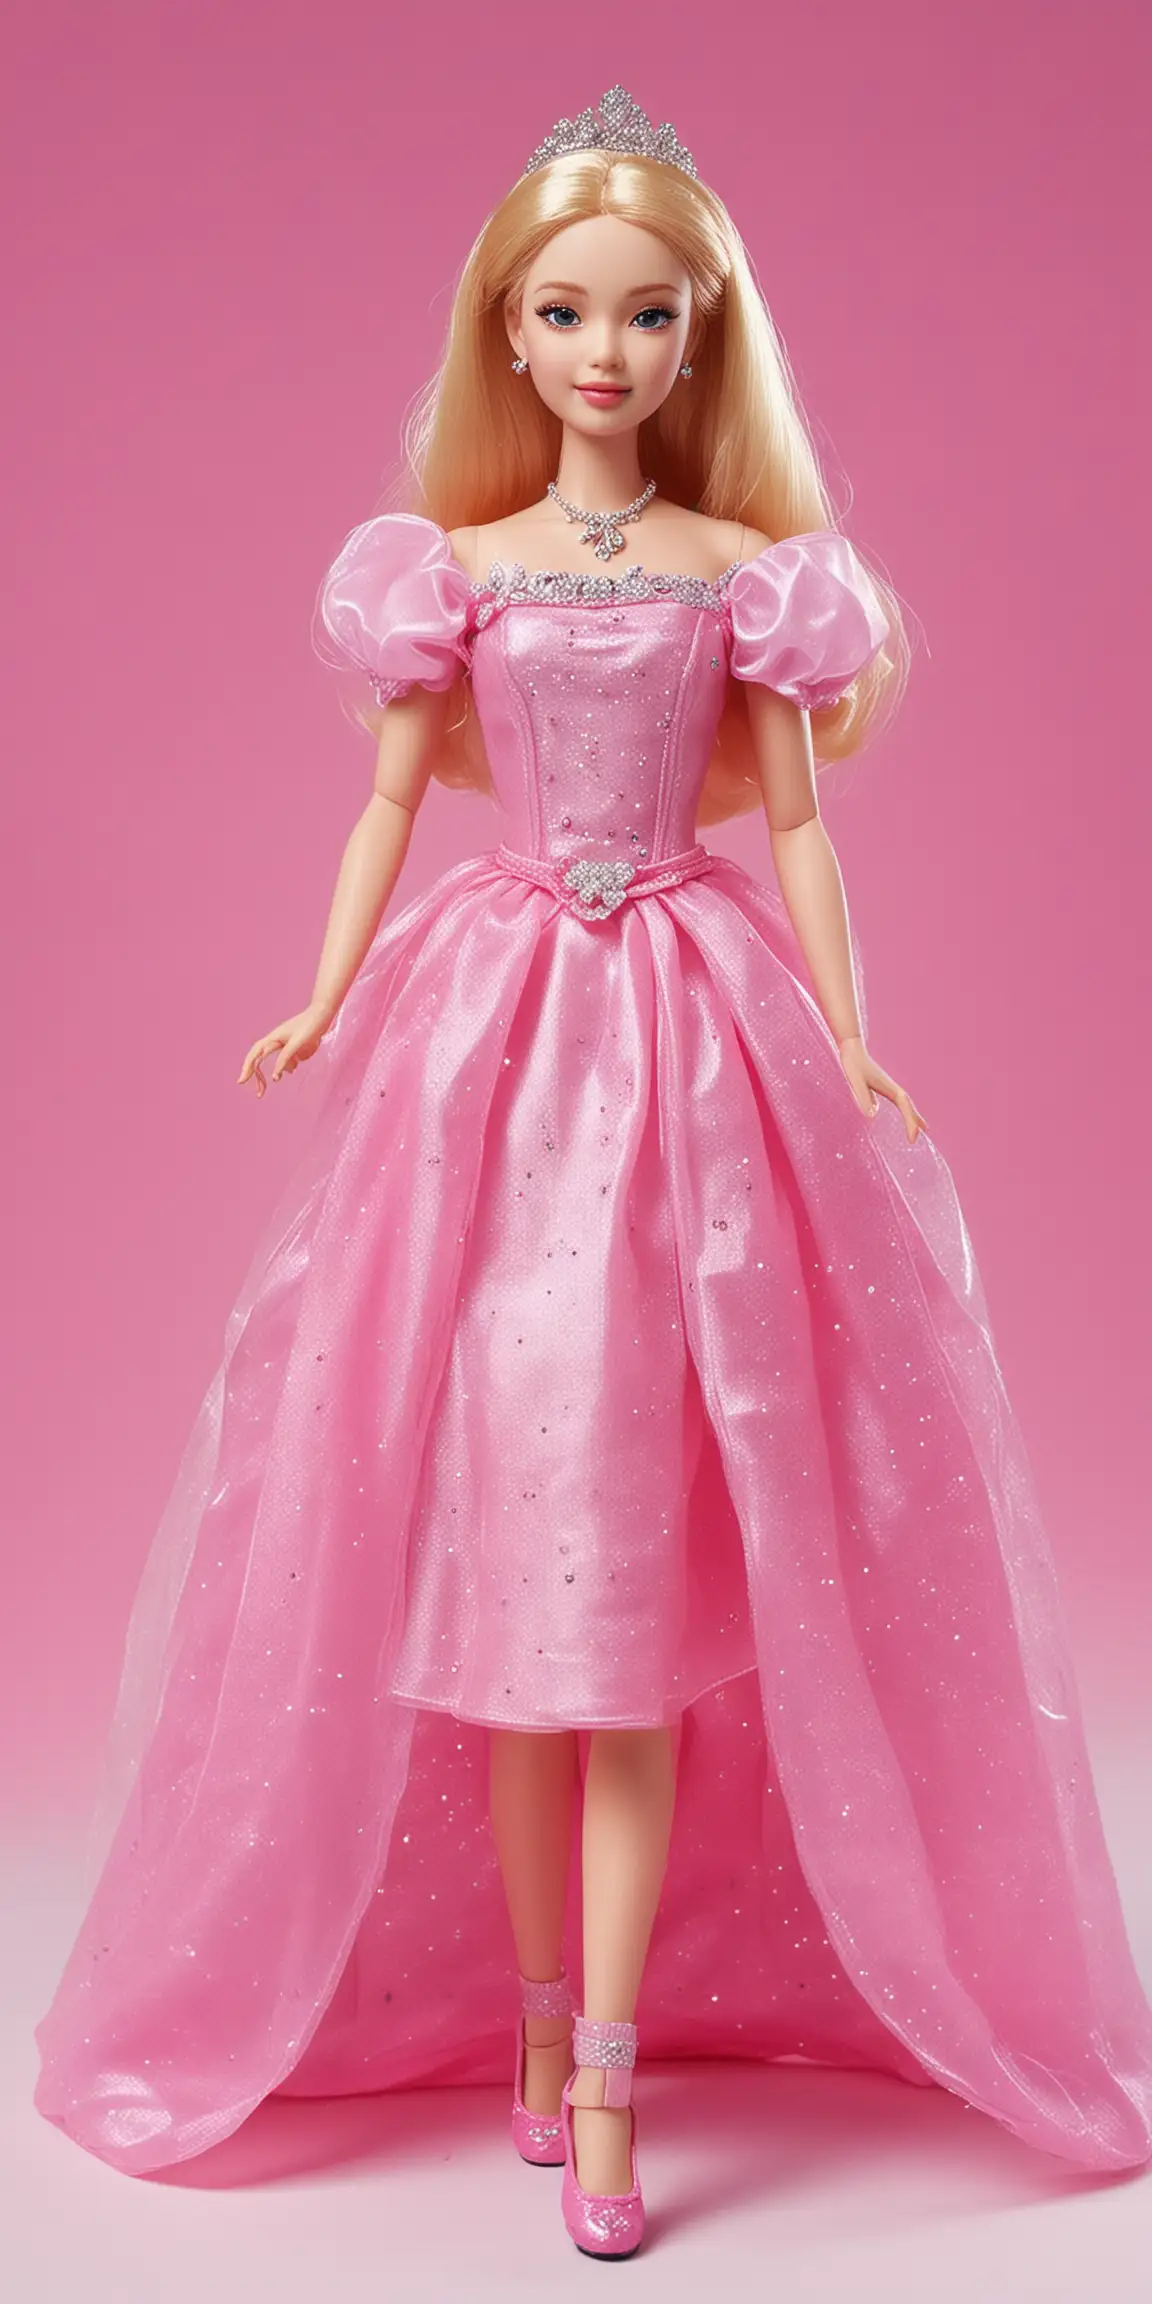 Seo Yeaji Barbie Doll in Cinderella Costume on Plastic Cardboard